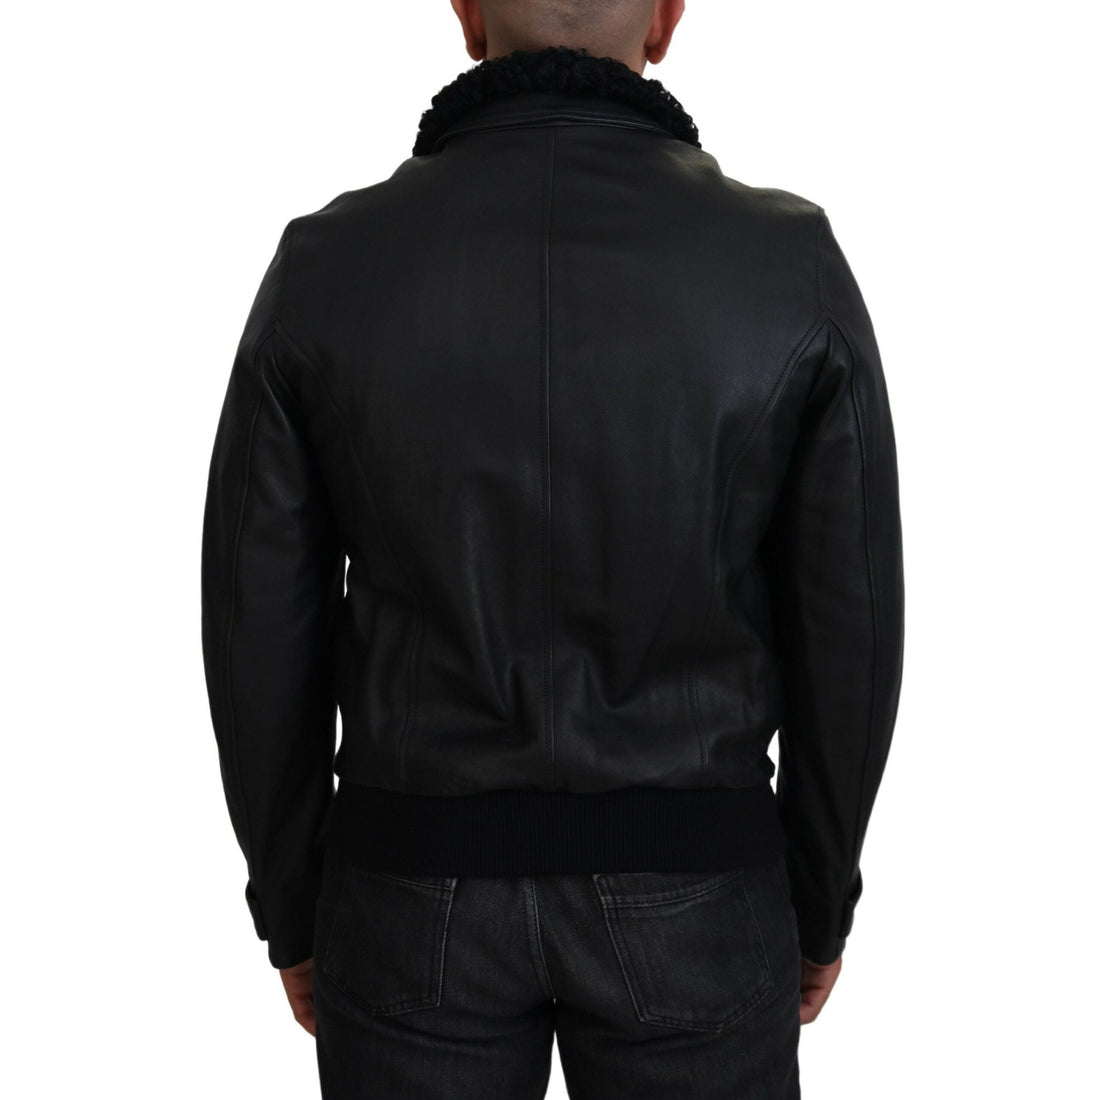 Dolce & Gabbana Chic Black Leather Silk-Lined Jacket